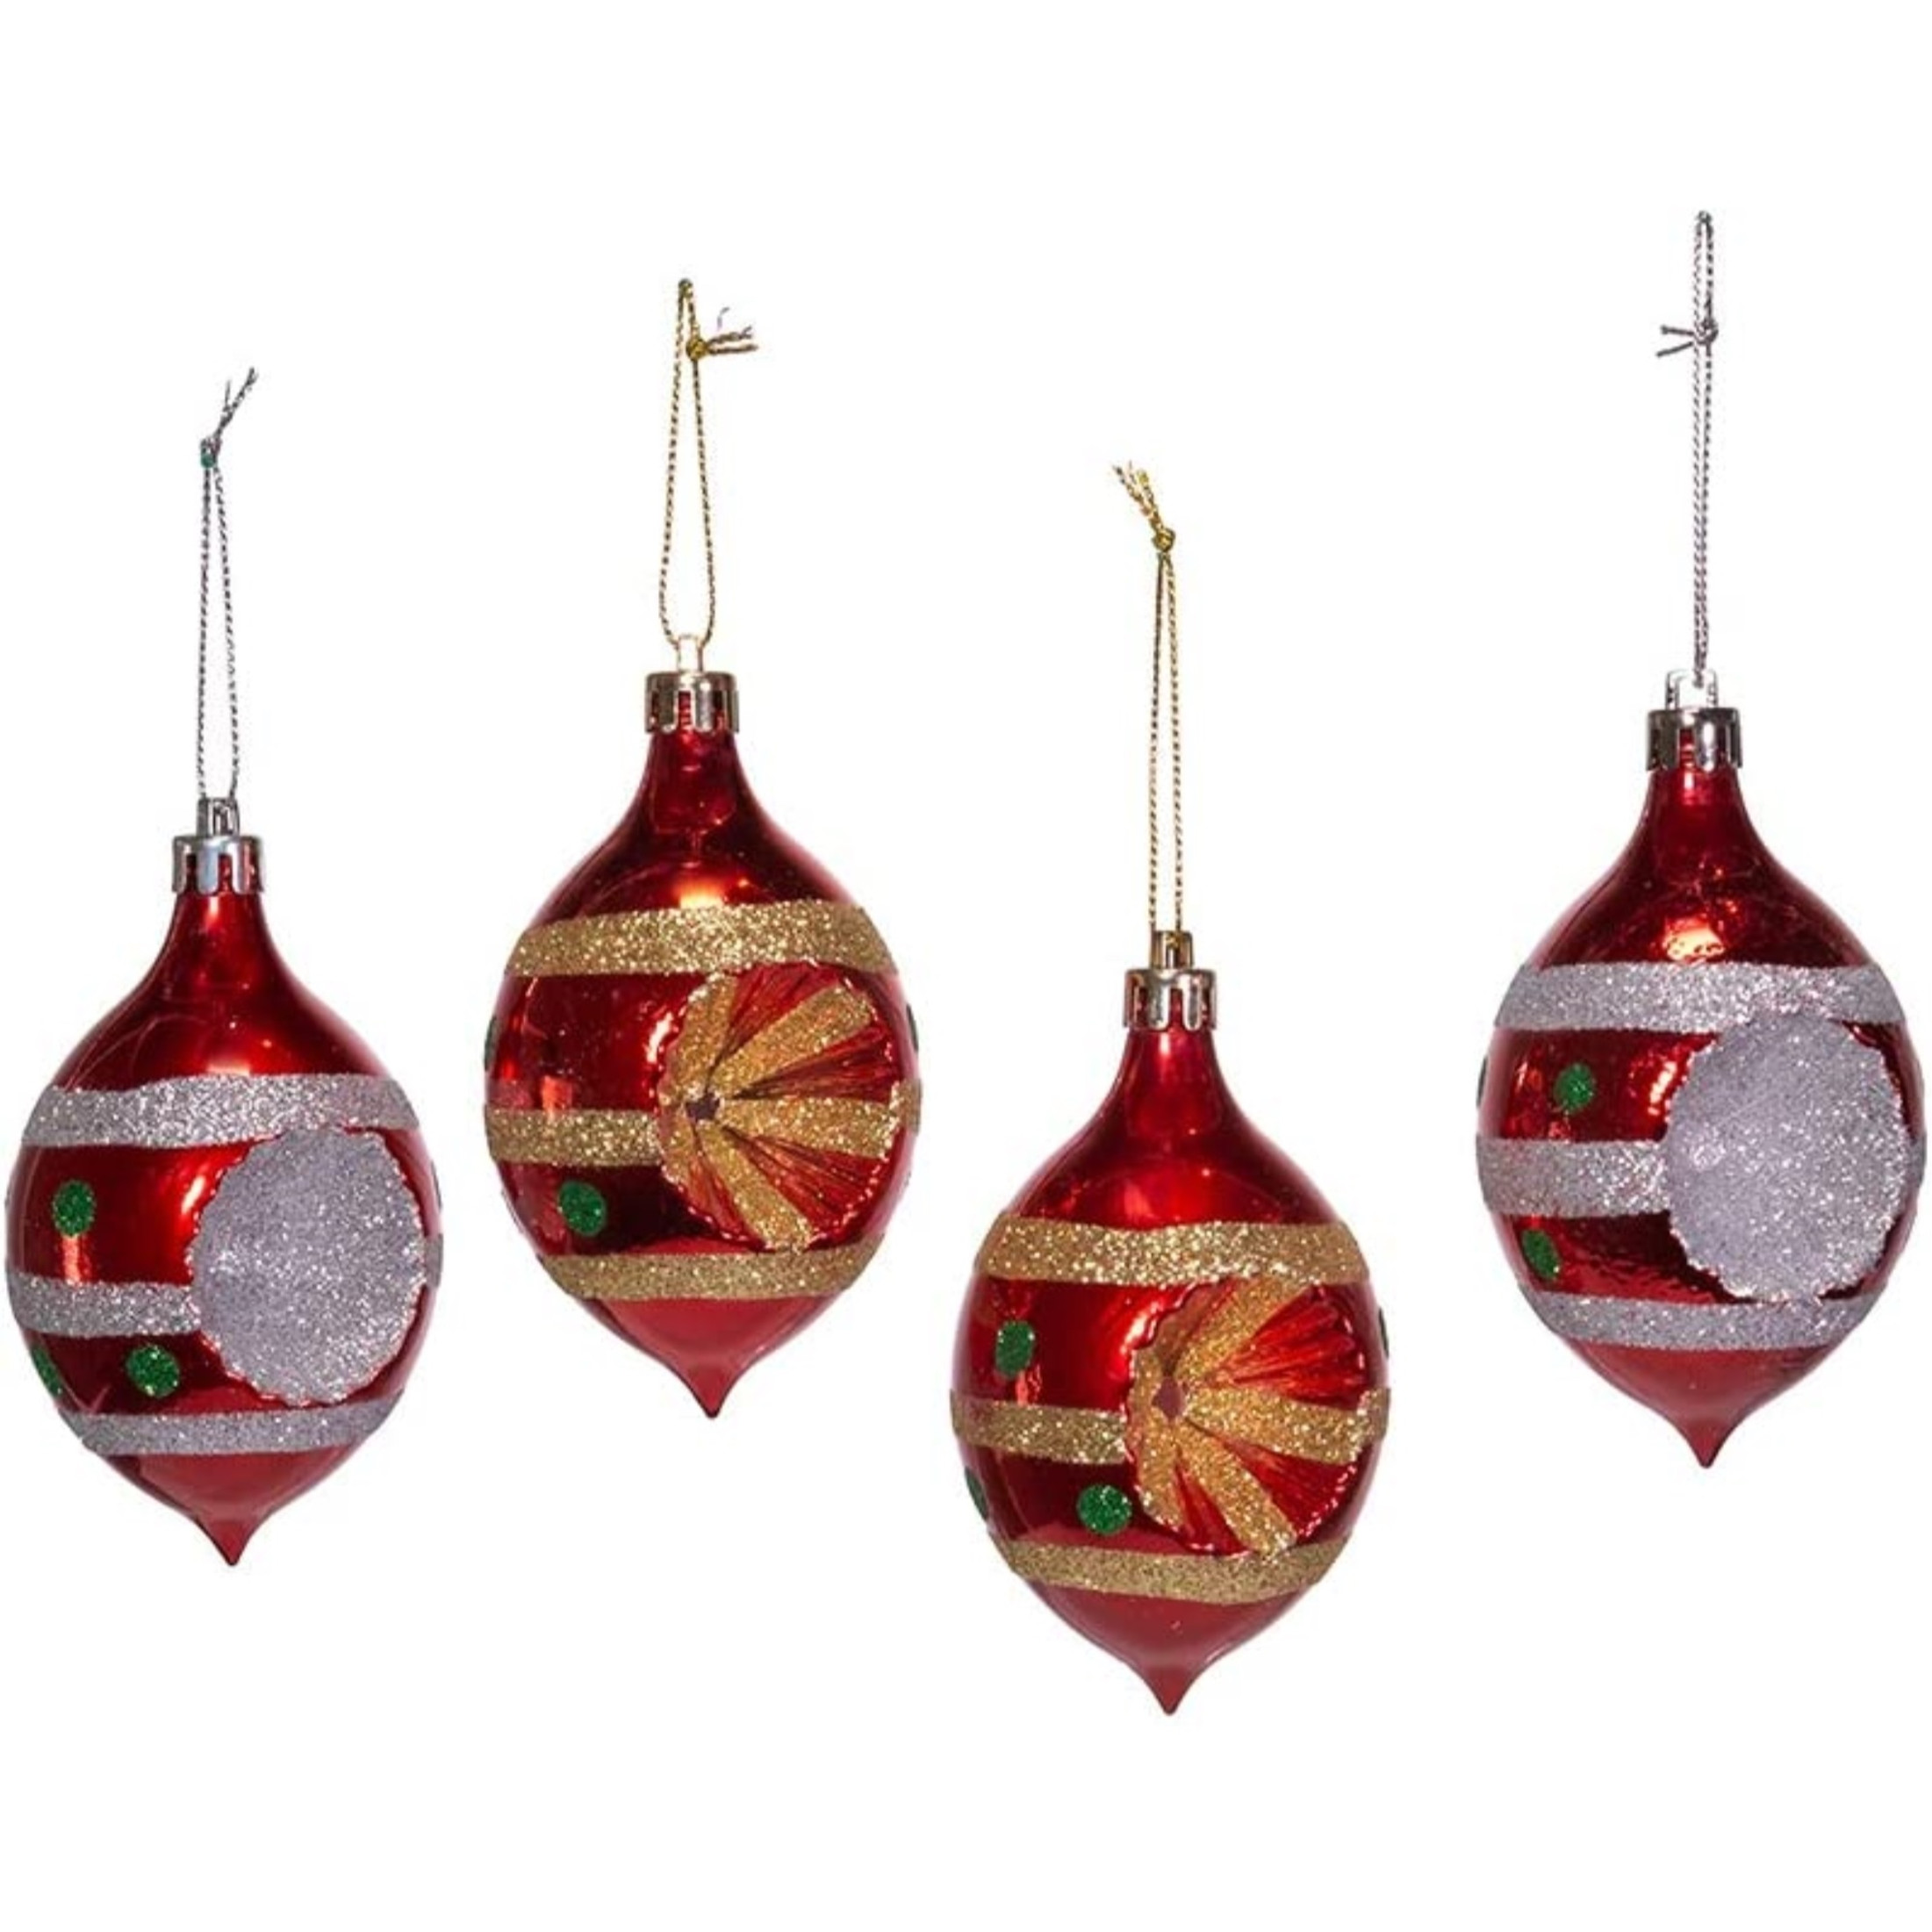 Kurt Adler Christmas Ornament Set 4 Piece, Plastic Set, Multi-Colored, 2.5"